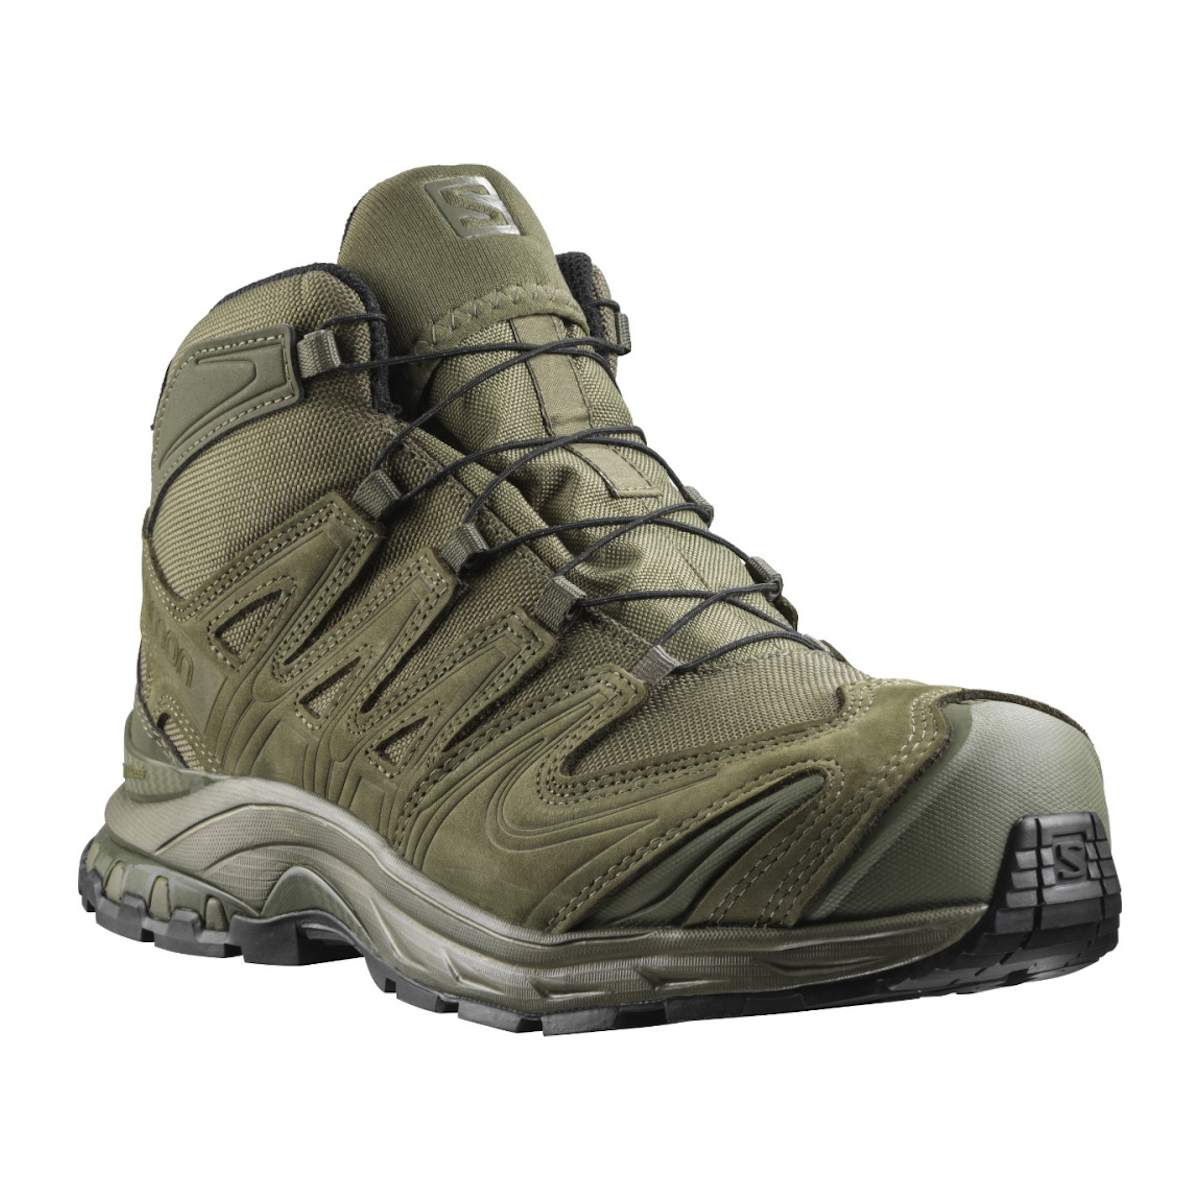 SALOMON XA FORCES MID GTX EN unisex forces shoes - ranger green